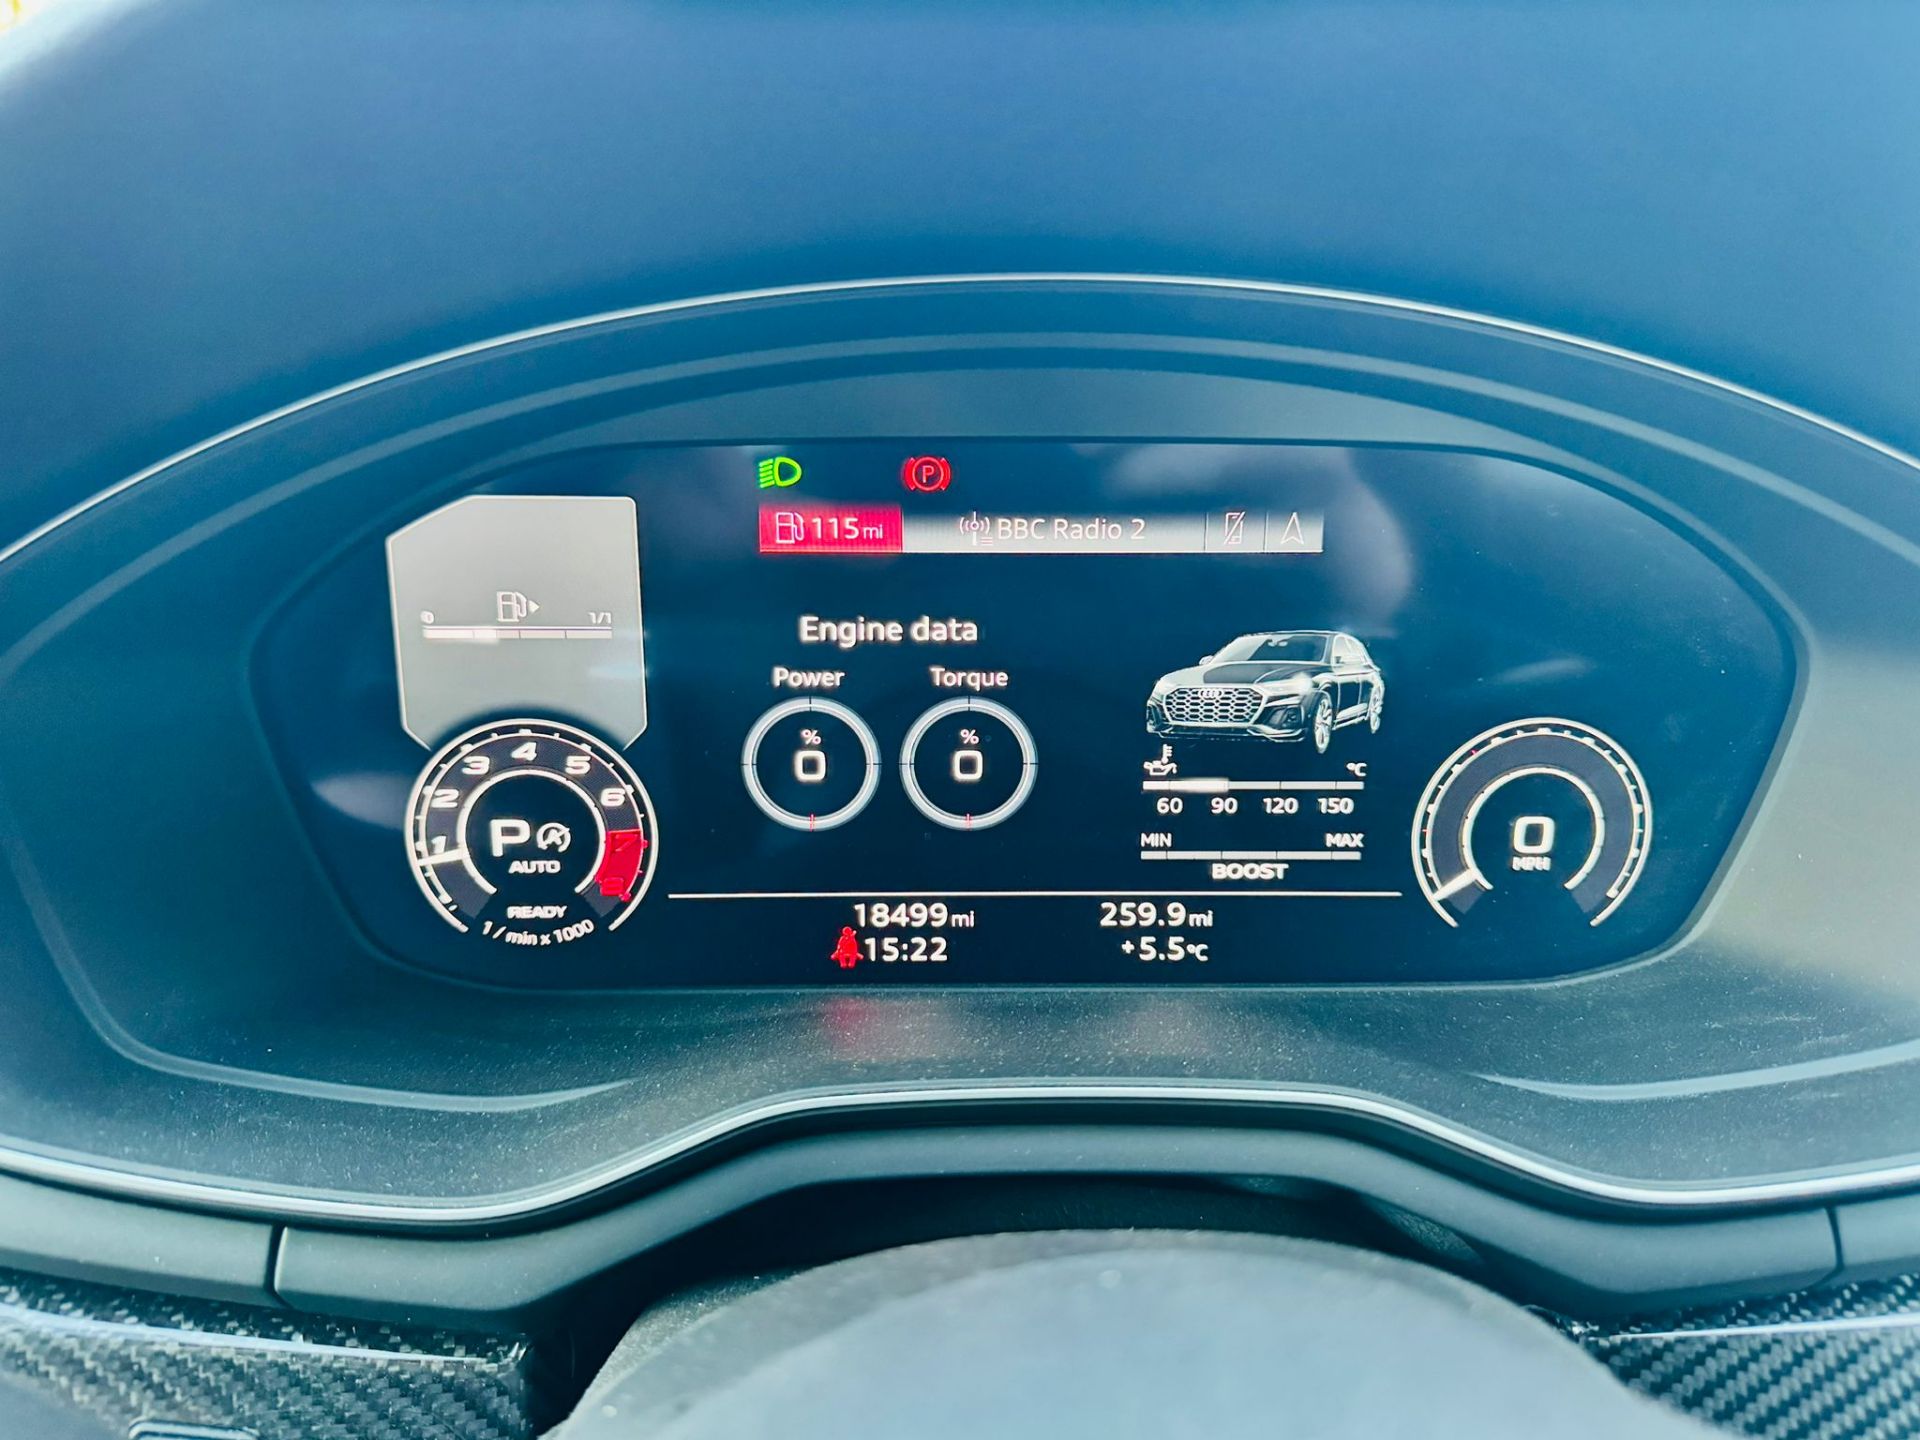 Audi RS5 TFSI "CARBON BLACK EDITION" QUATTRO (450BHP) 2021 21 Reg “HUGE SPEC” 1 OWNER 18K MILES - Image 25 of 36